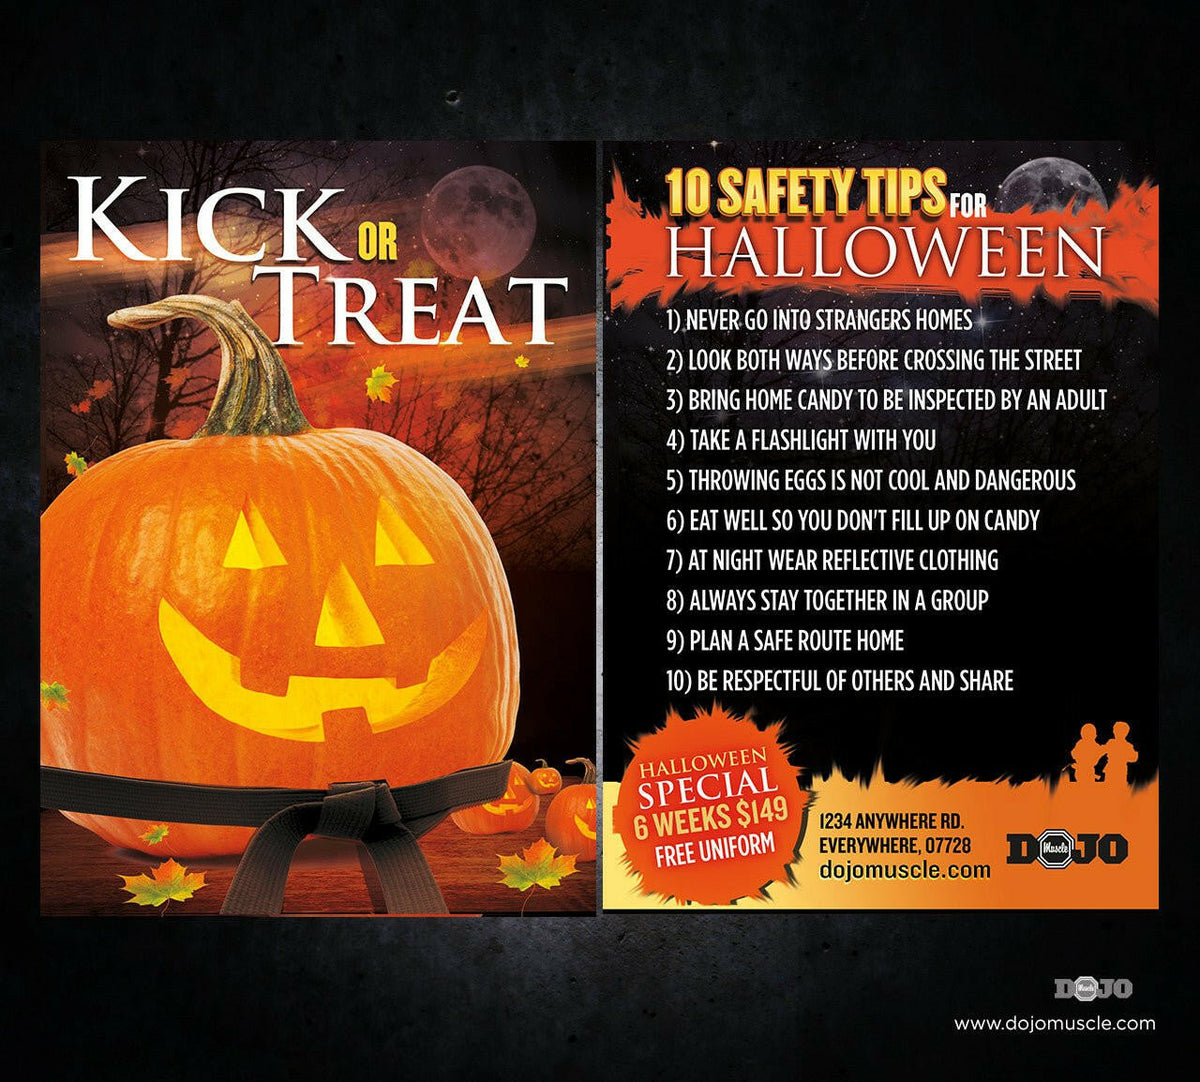 Kick or Treat Safety Tips Halloween Card 2d - Dojo Muscle